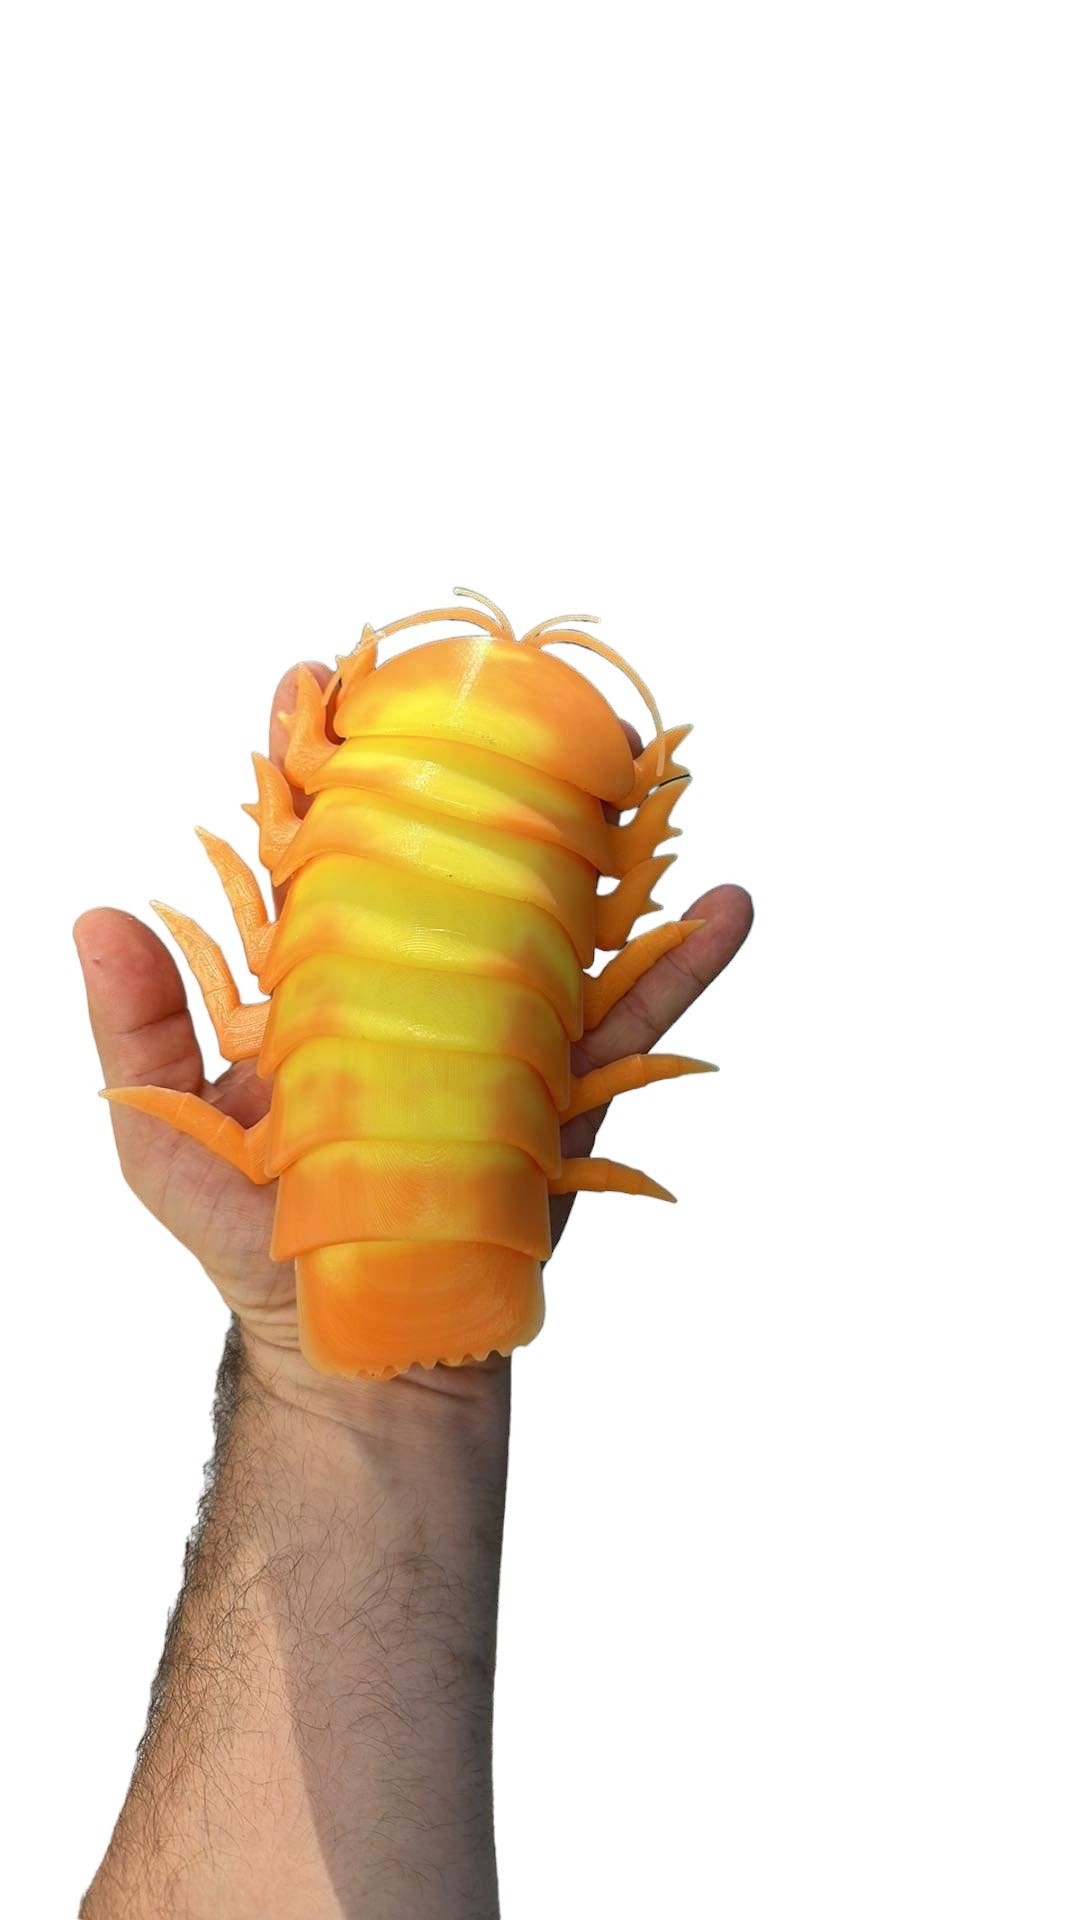 3D Printed Isopod